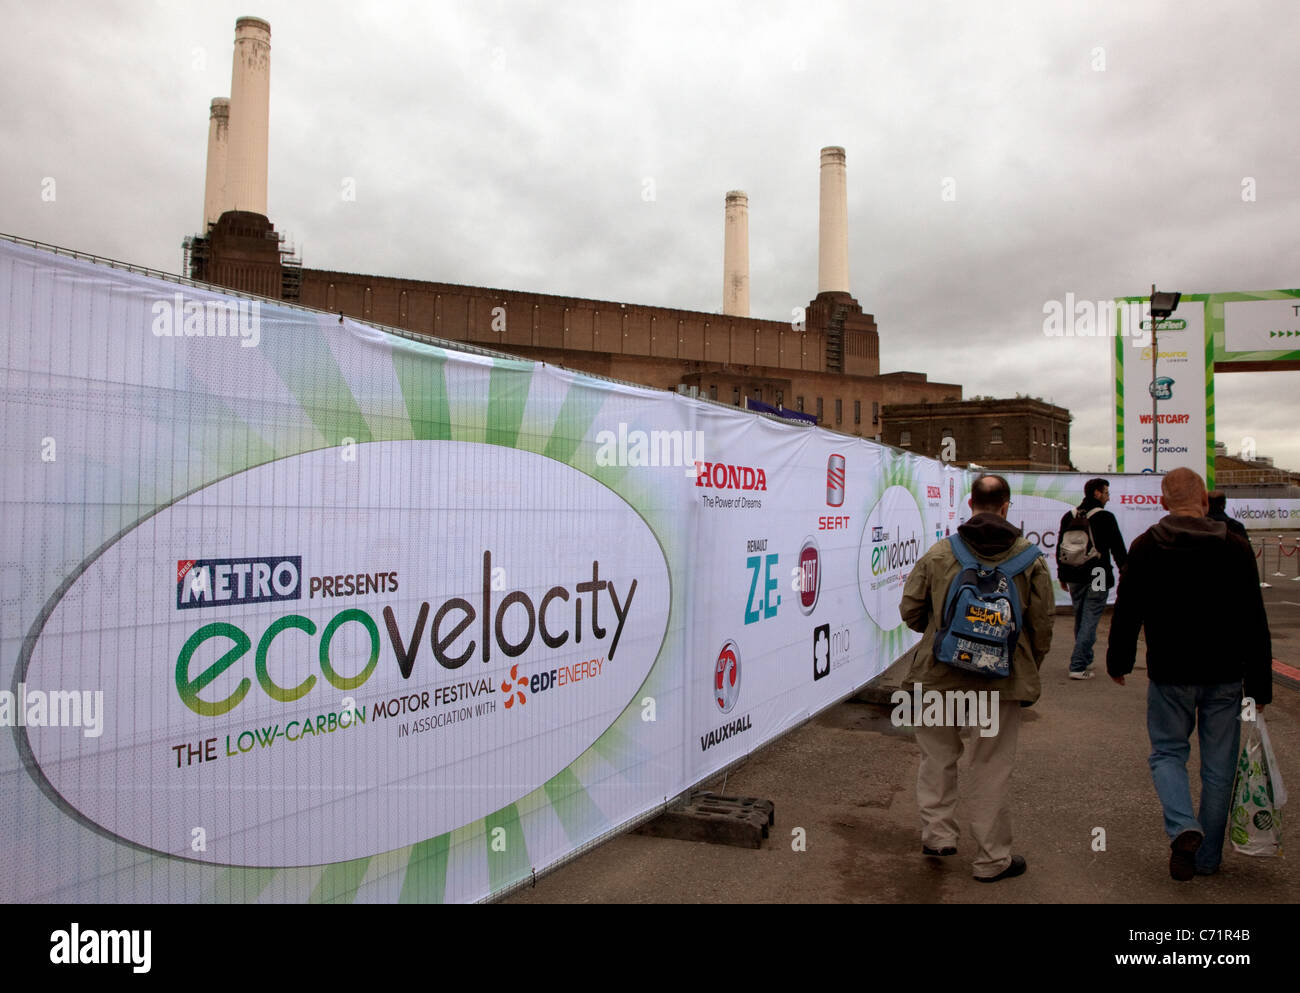 Ecovelocity motor festival at Battersea Power Station, London Stock Photo